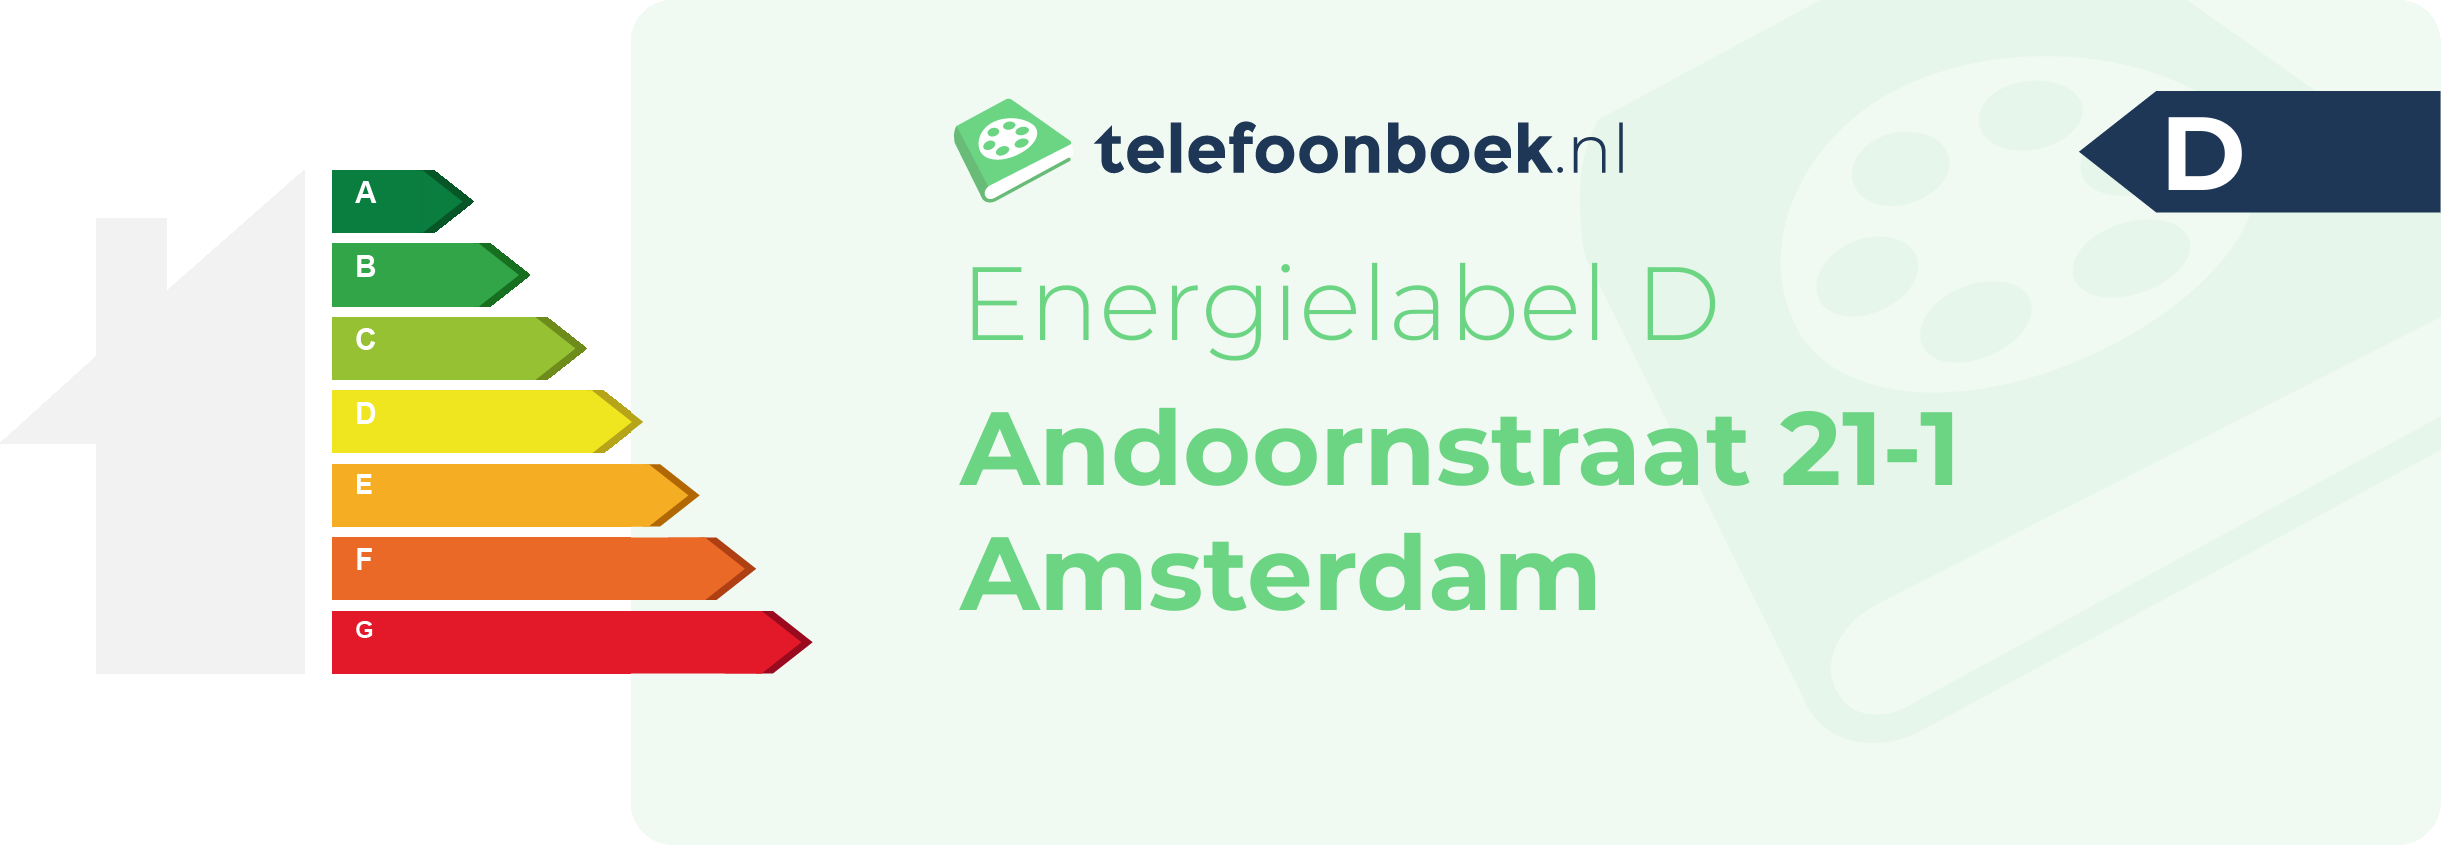 Energielabel Andoornstraat 21-1 Amsterdam